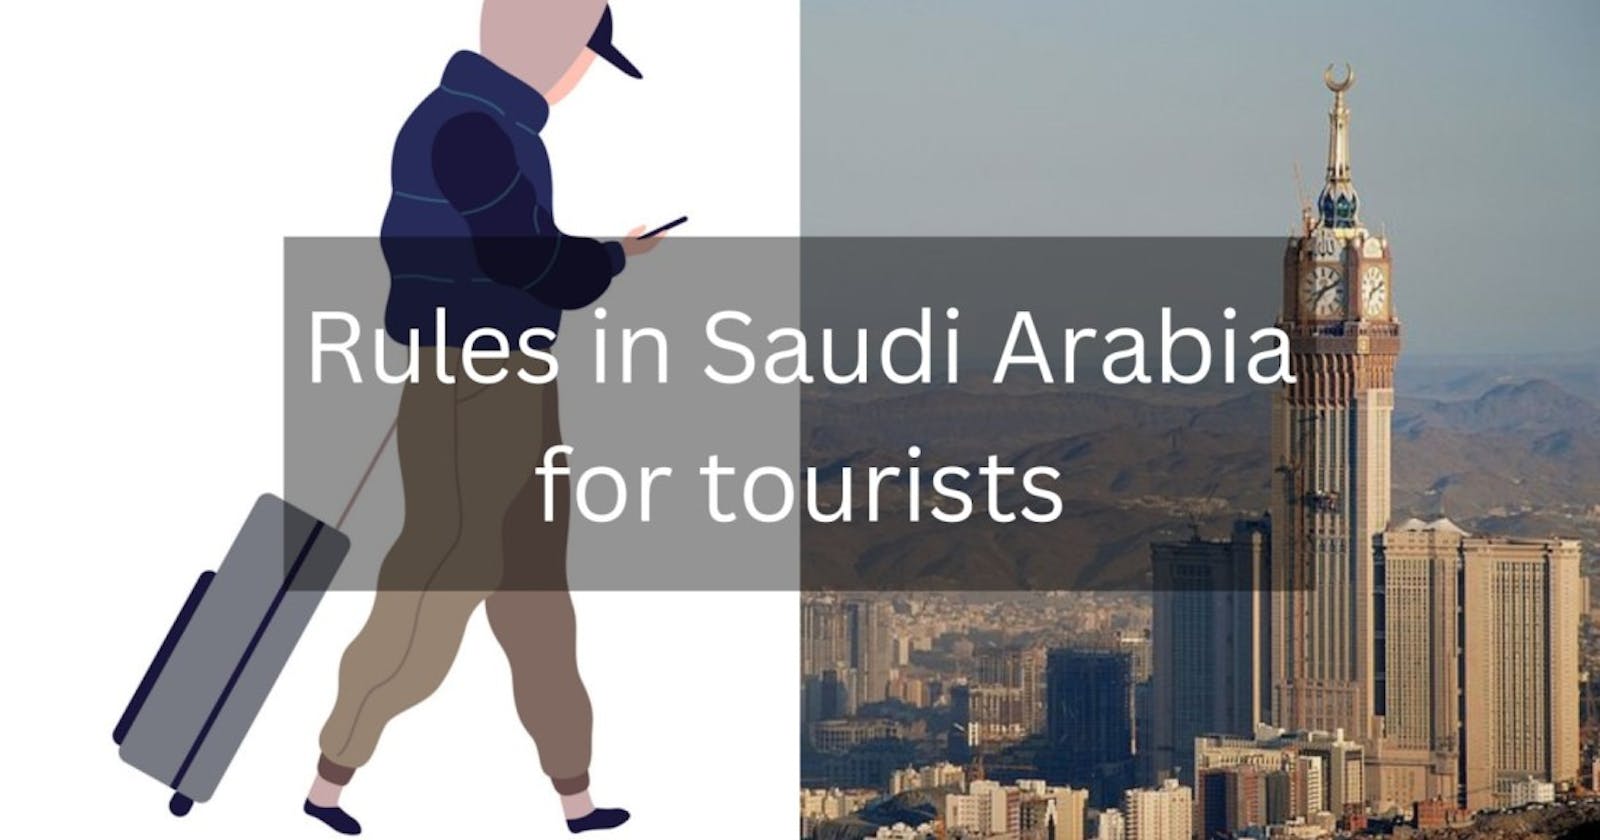 Rules in Saudi Arabia for tourists